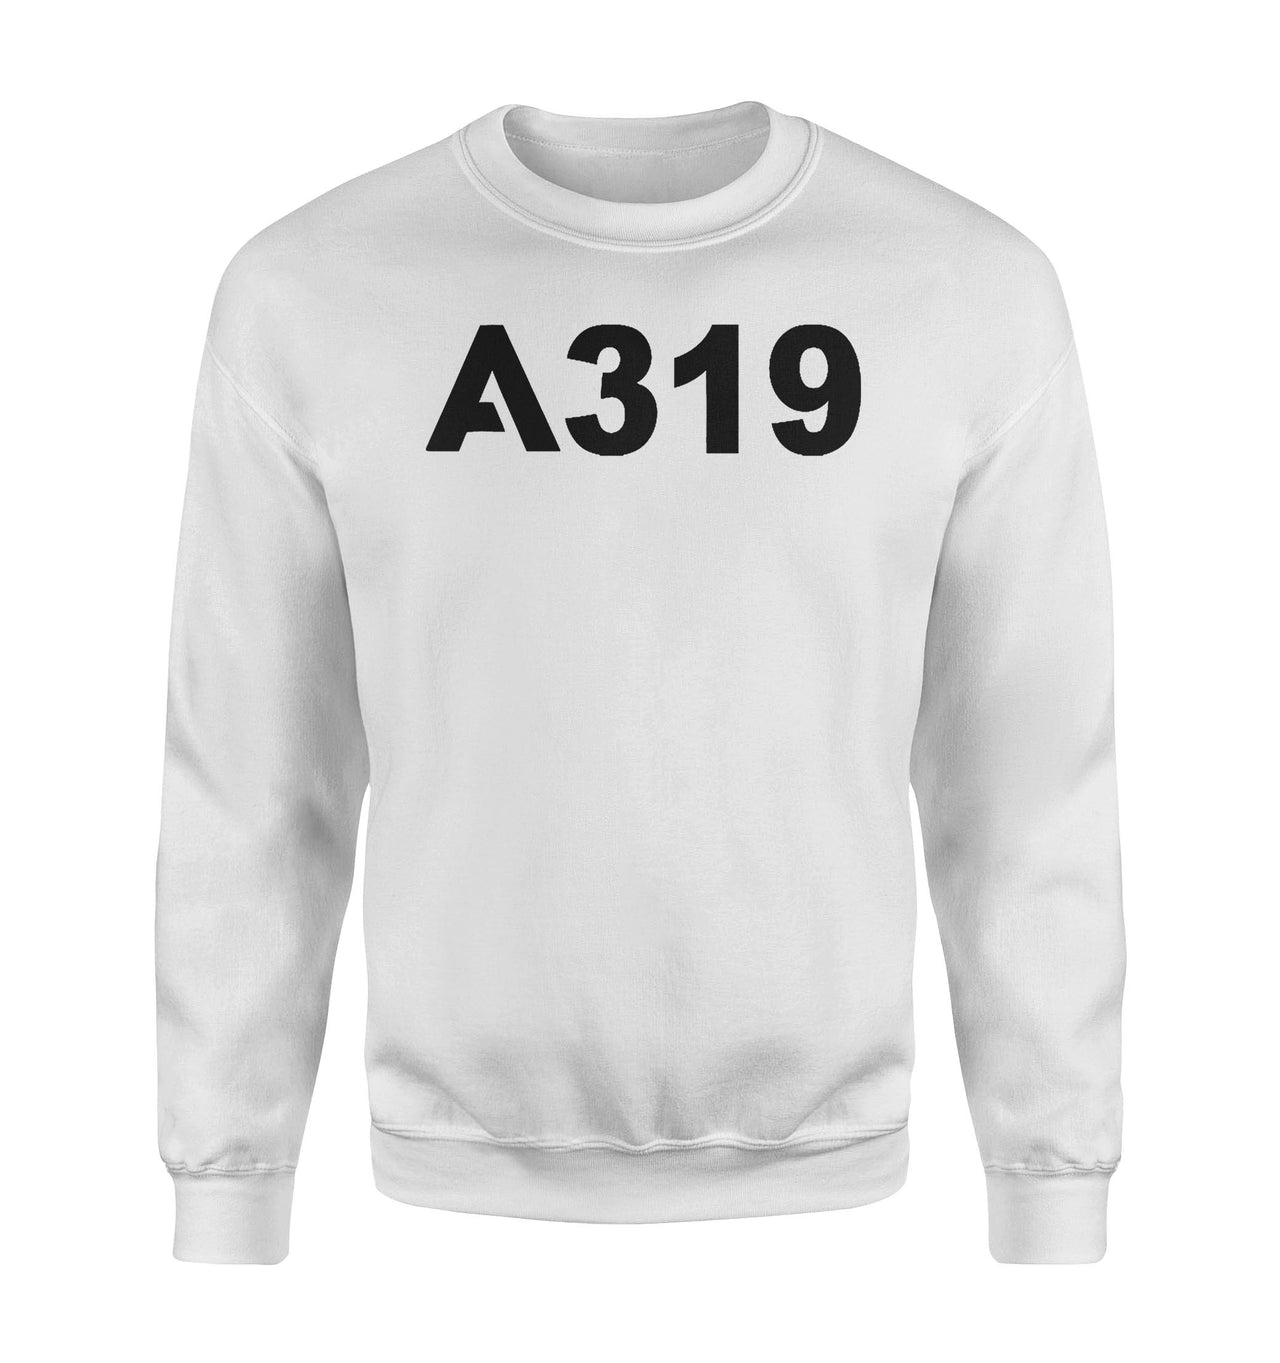 A319 Flat Text Designed Sweatshirts